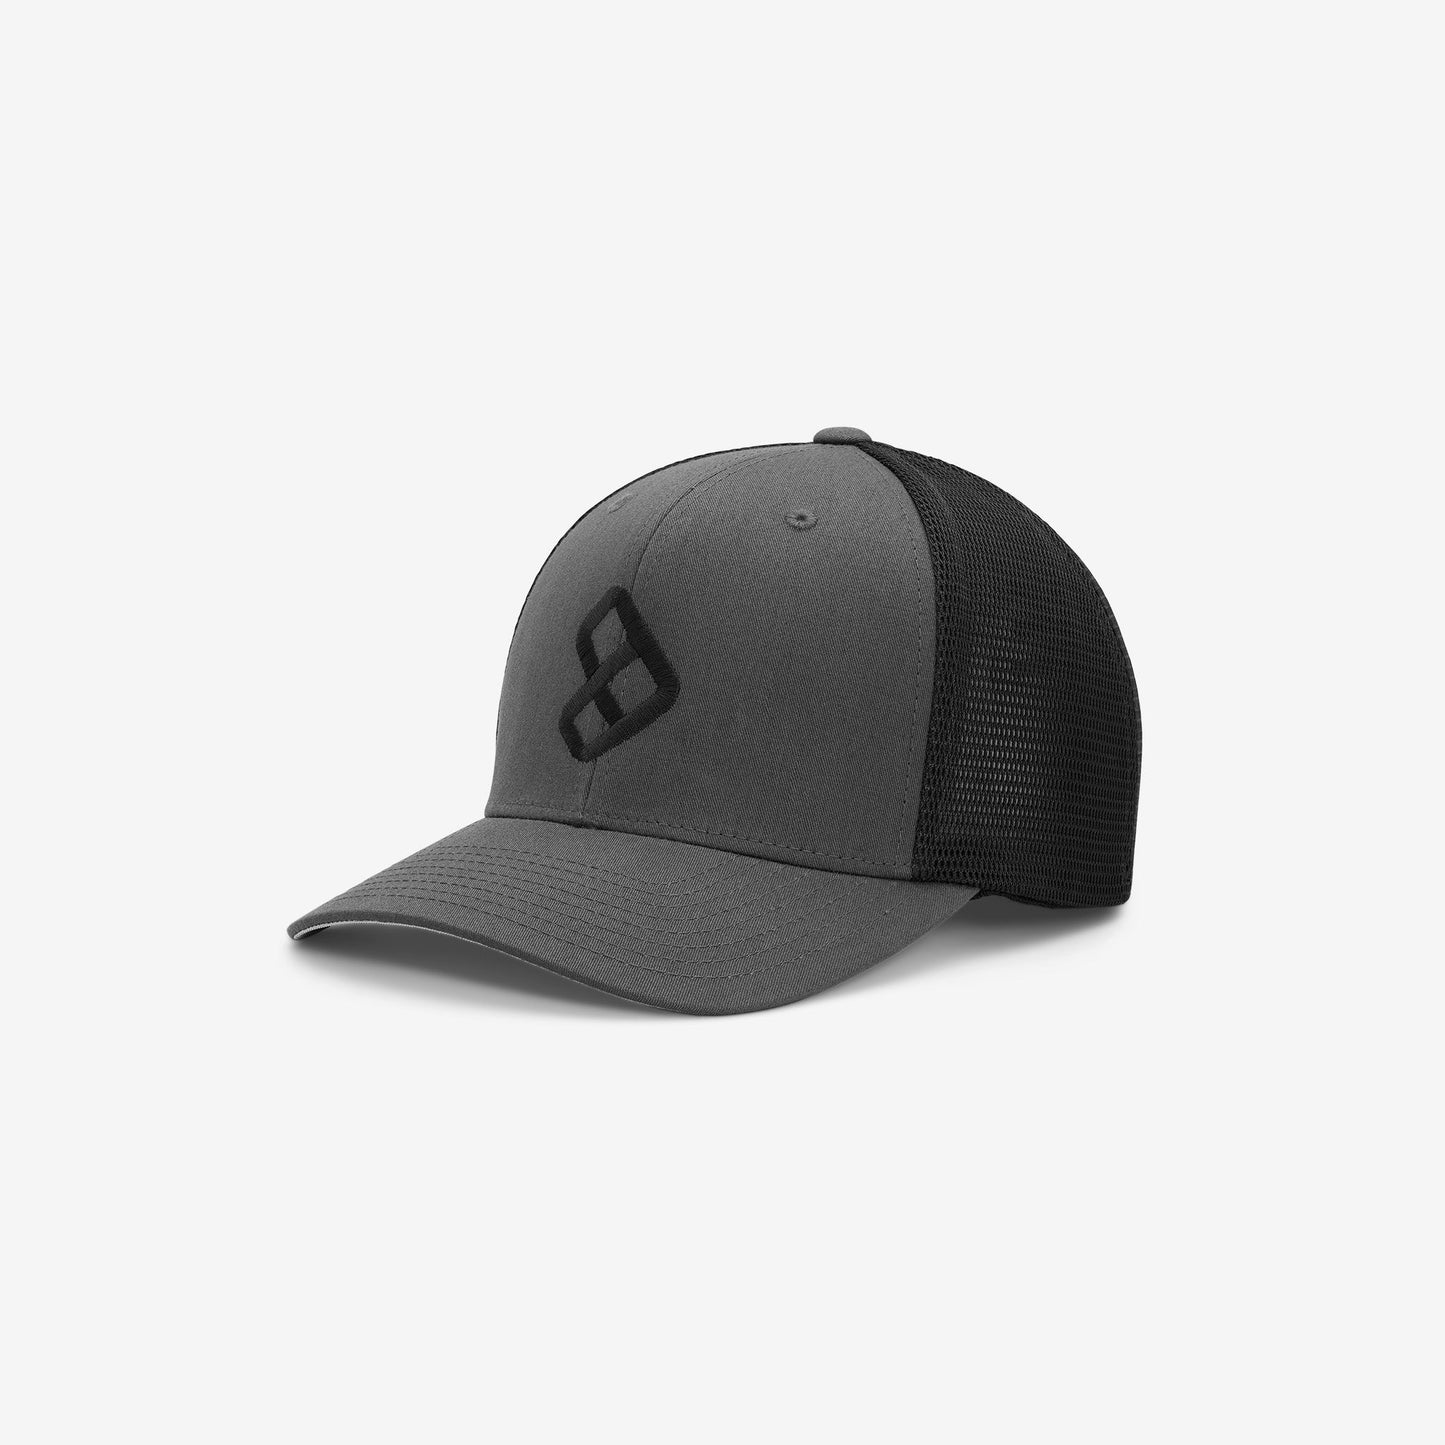 Sendlane Trucker Hat (Charcoal)